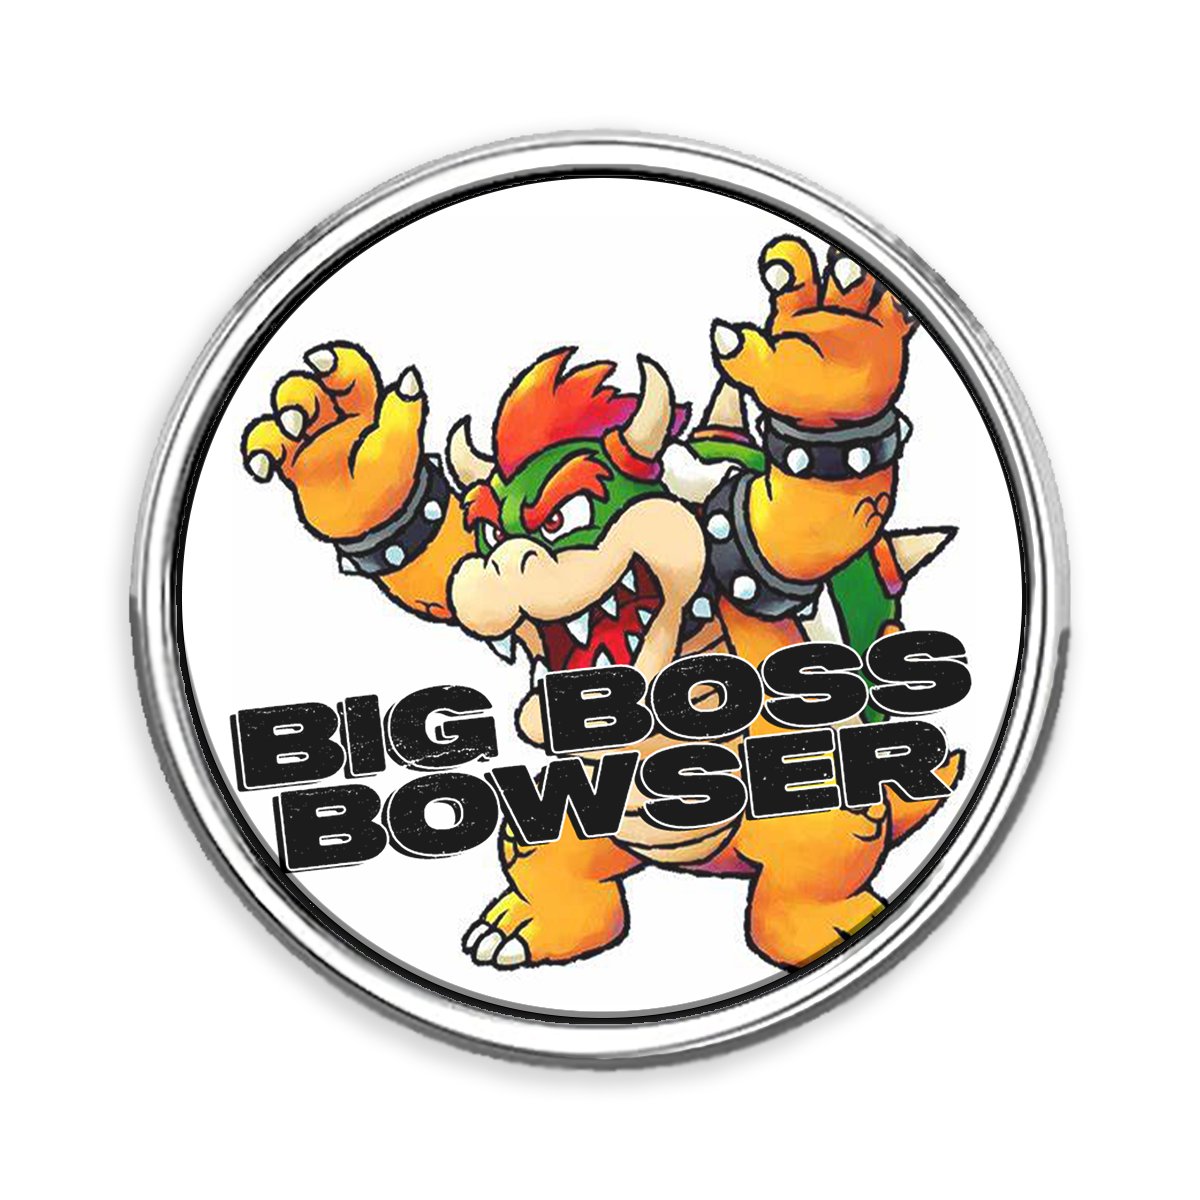 Big Boss Bowser Round Lapel Pin